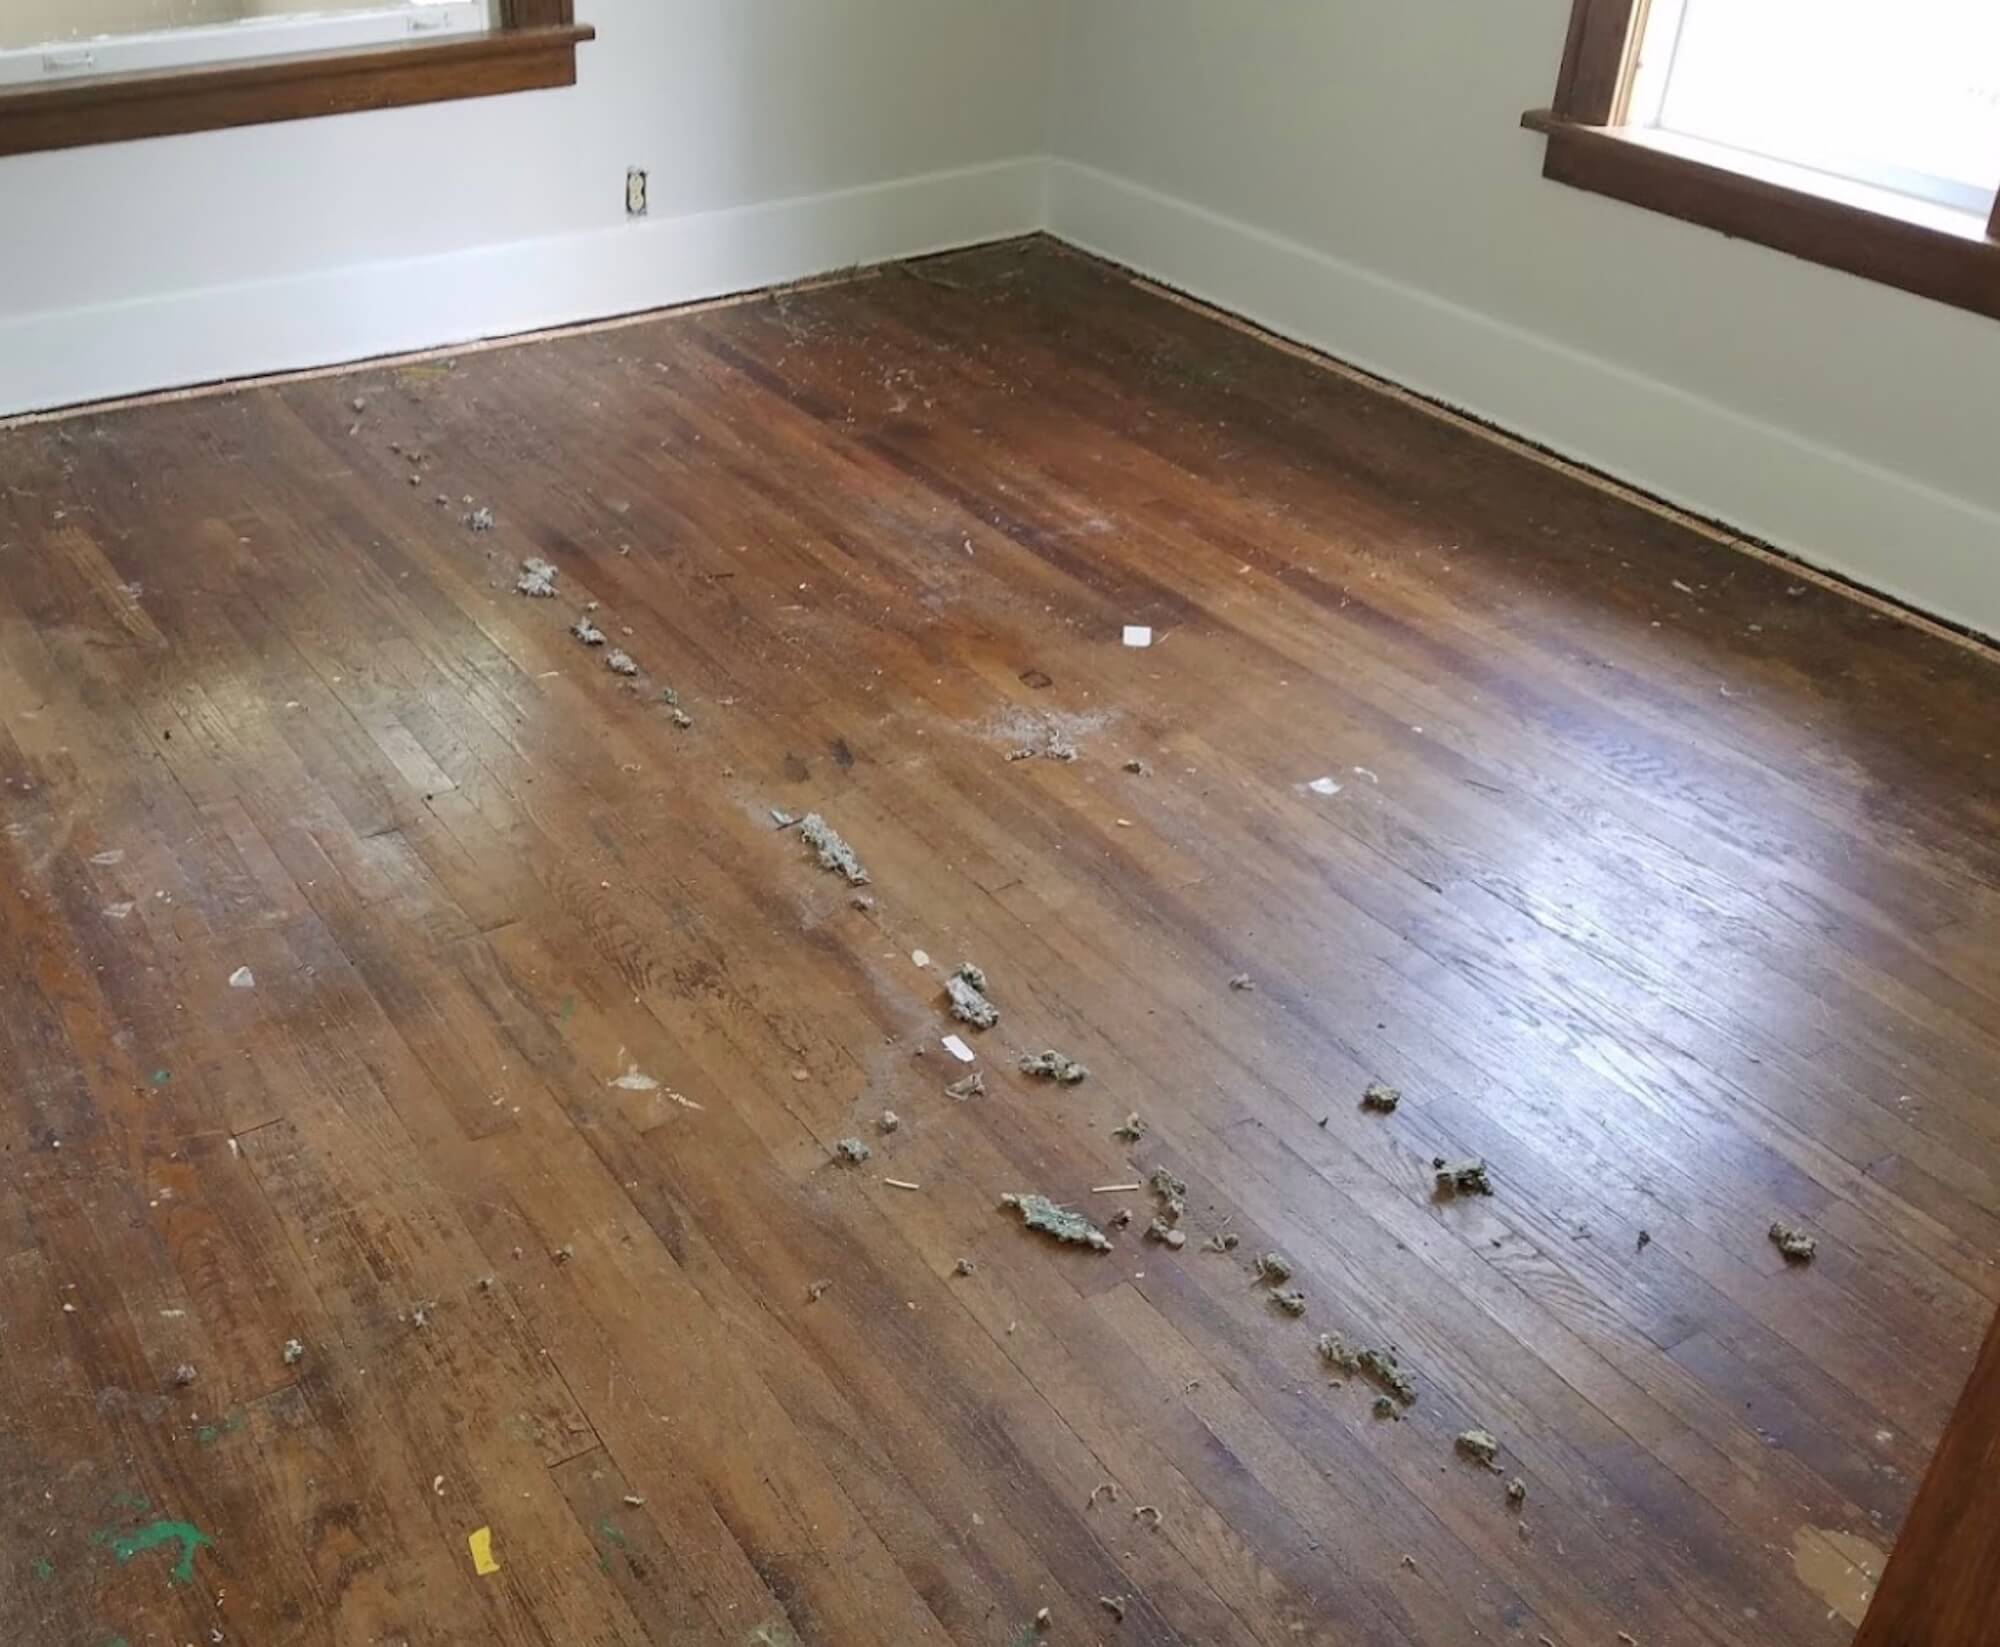 a dusty old wood floor